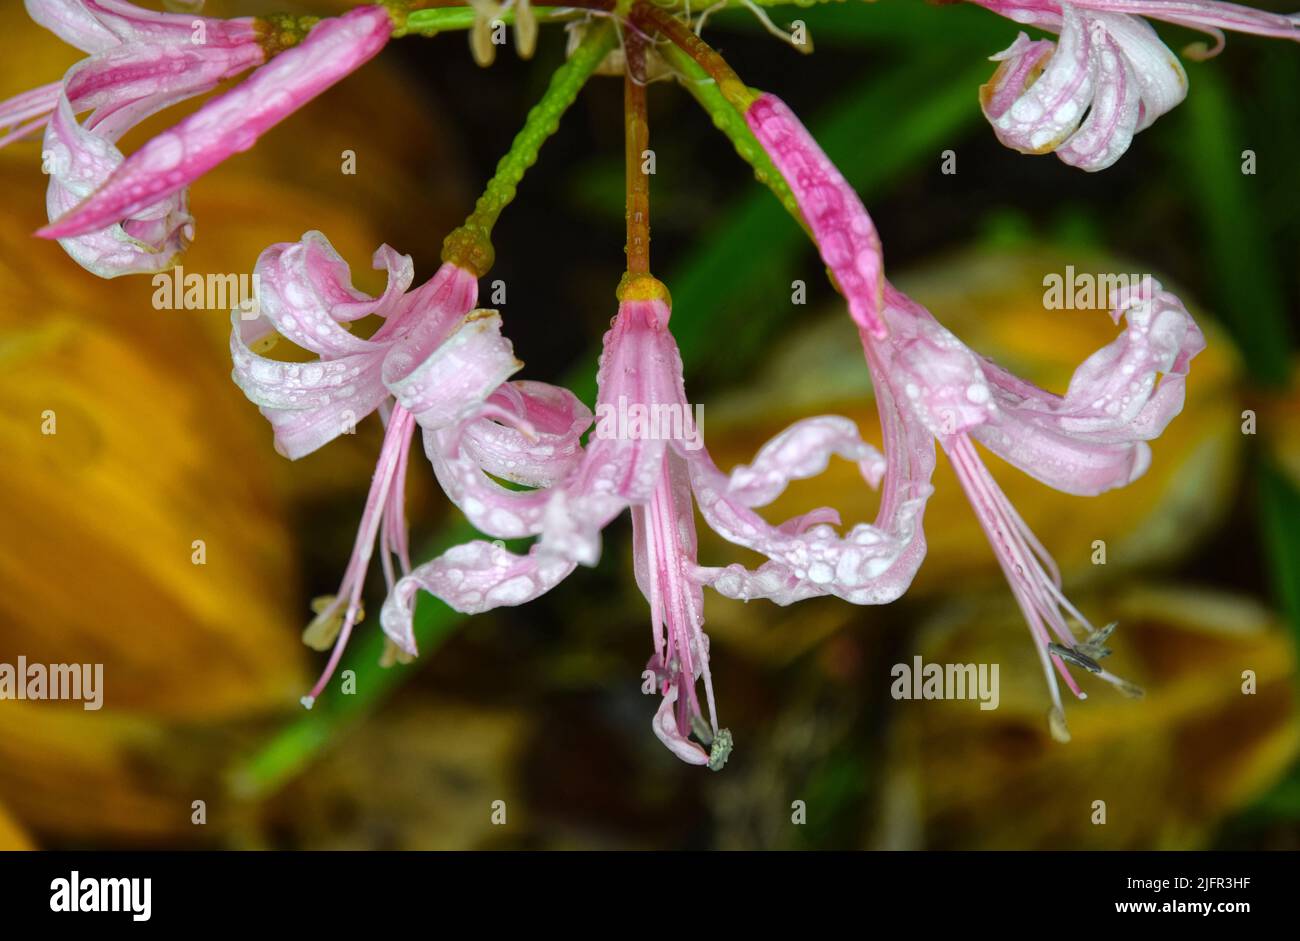 Nerine flower with raindrops Stock Photo